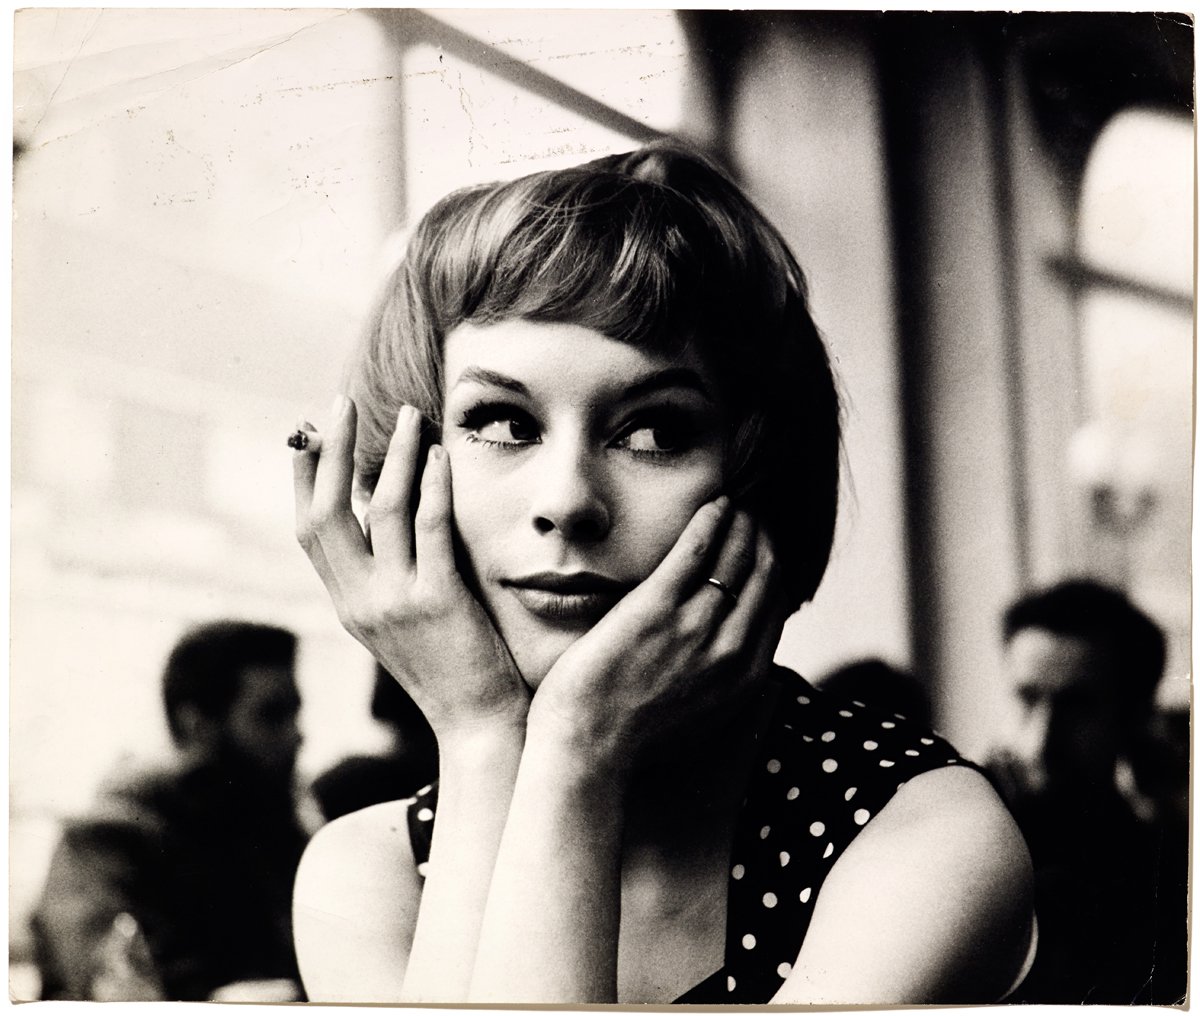 Girl-In-Cafe-late-1950s.-c-John-Deakin-The-John-Deakin-Archive-2013.jpg